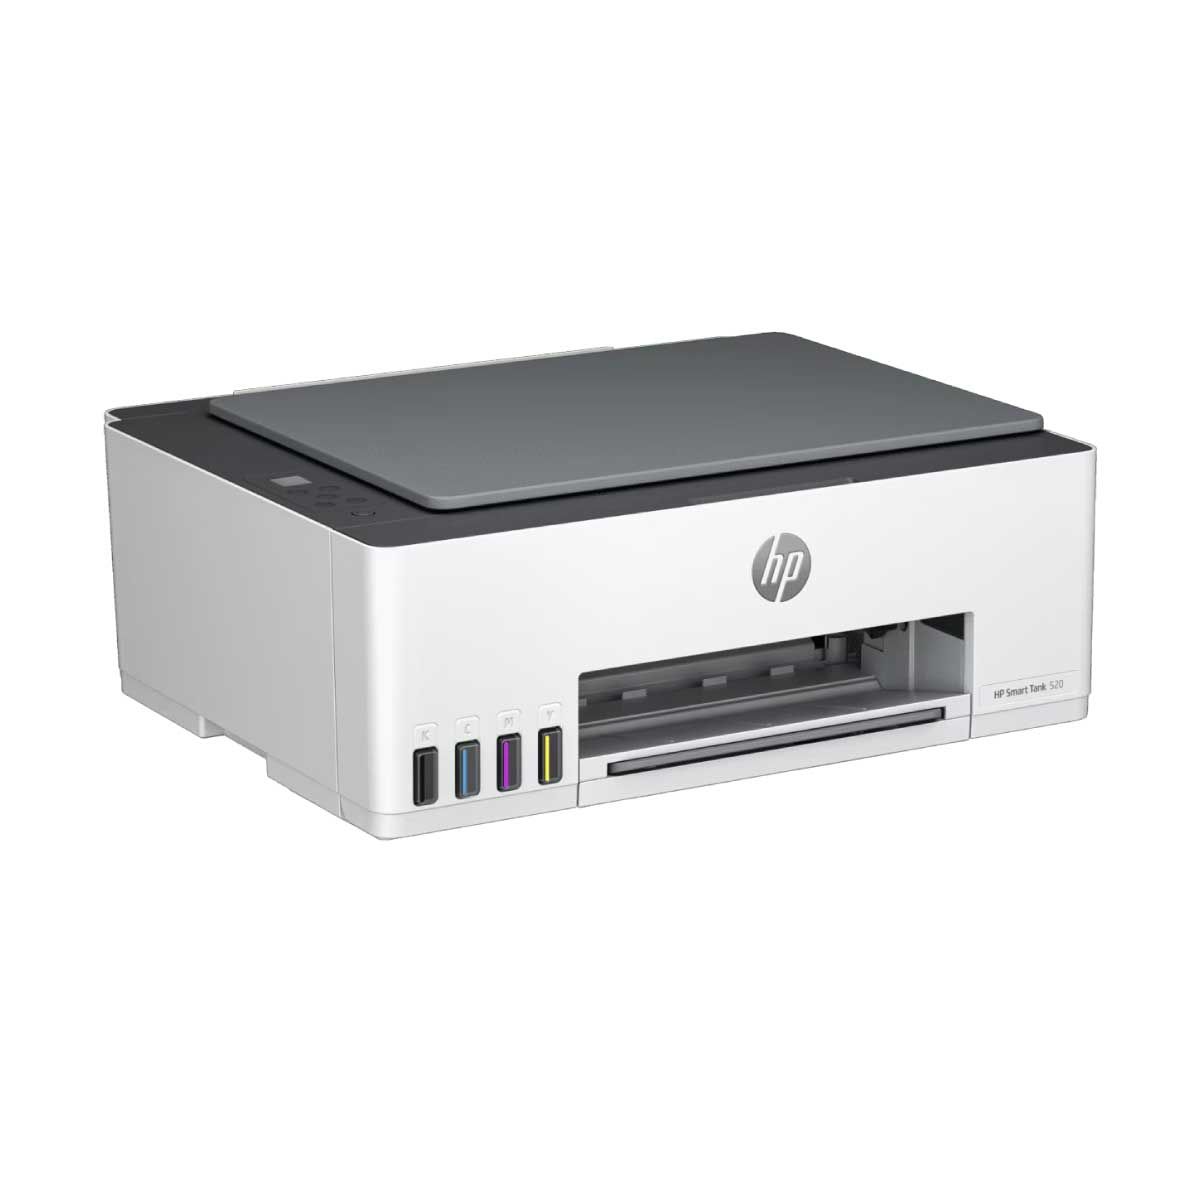 PRINTER (เครื่องพิมพ์) HP SMART TANK 520 ALL-IN-ONE